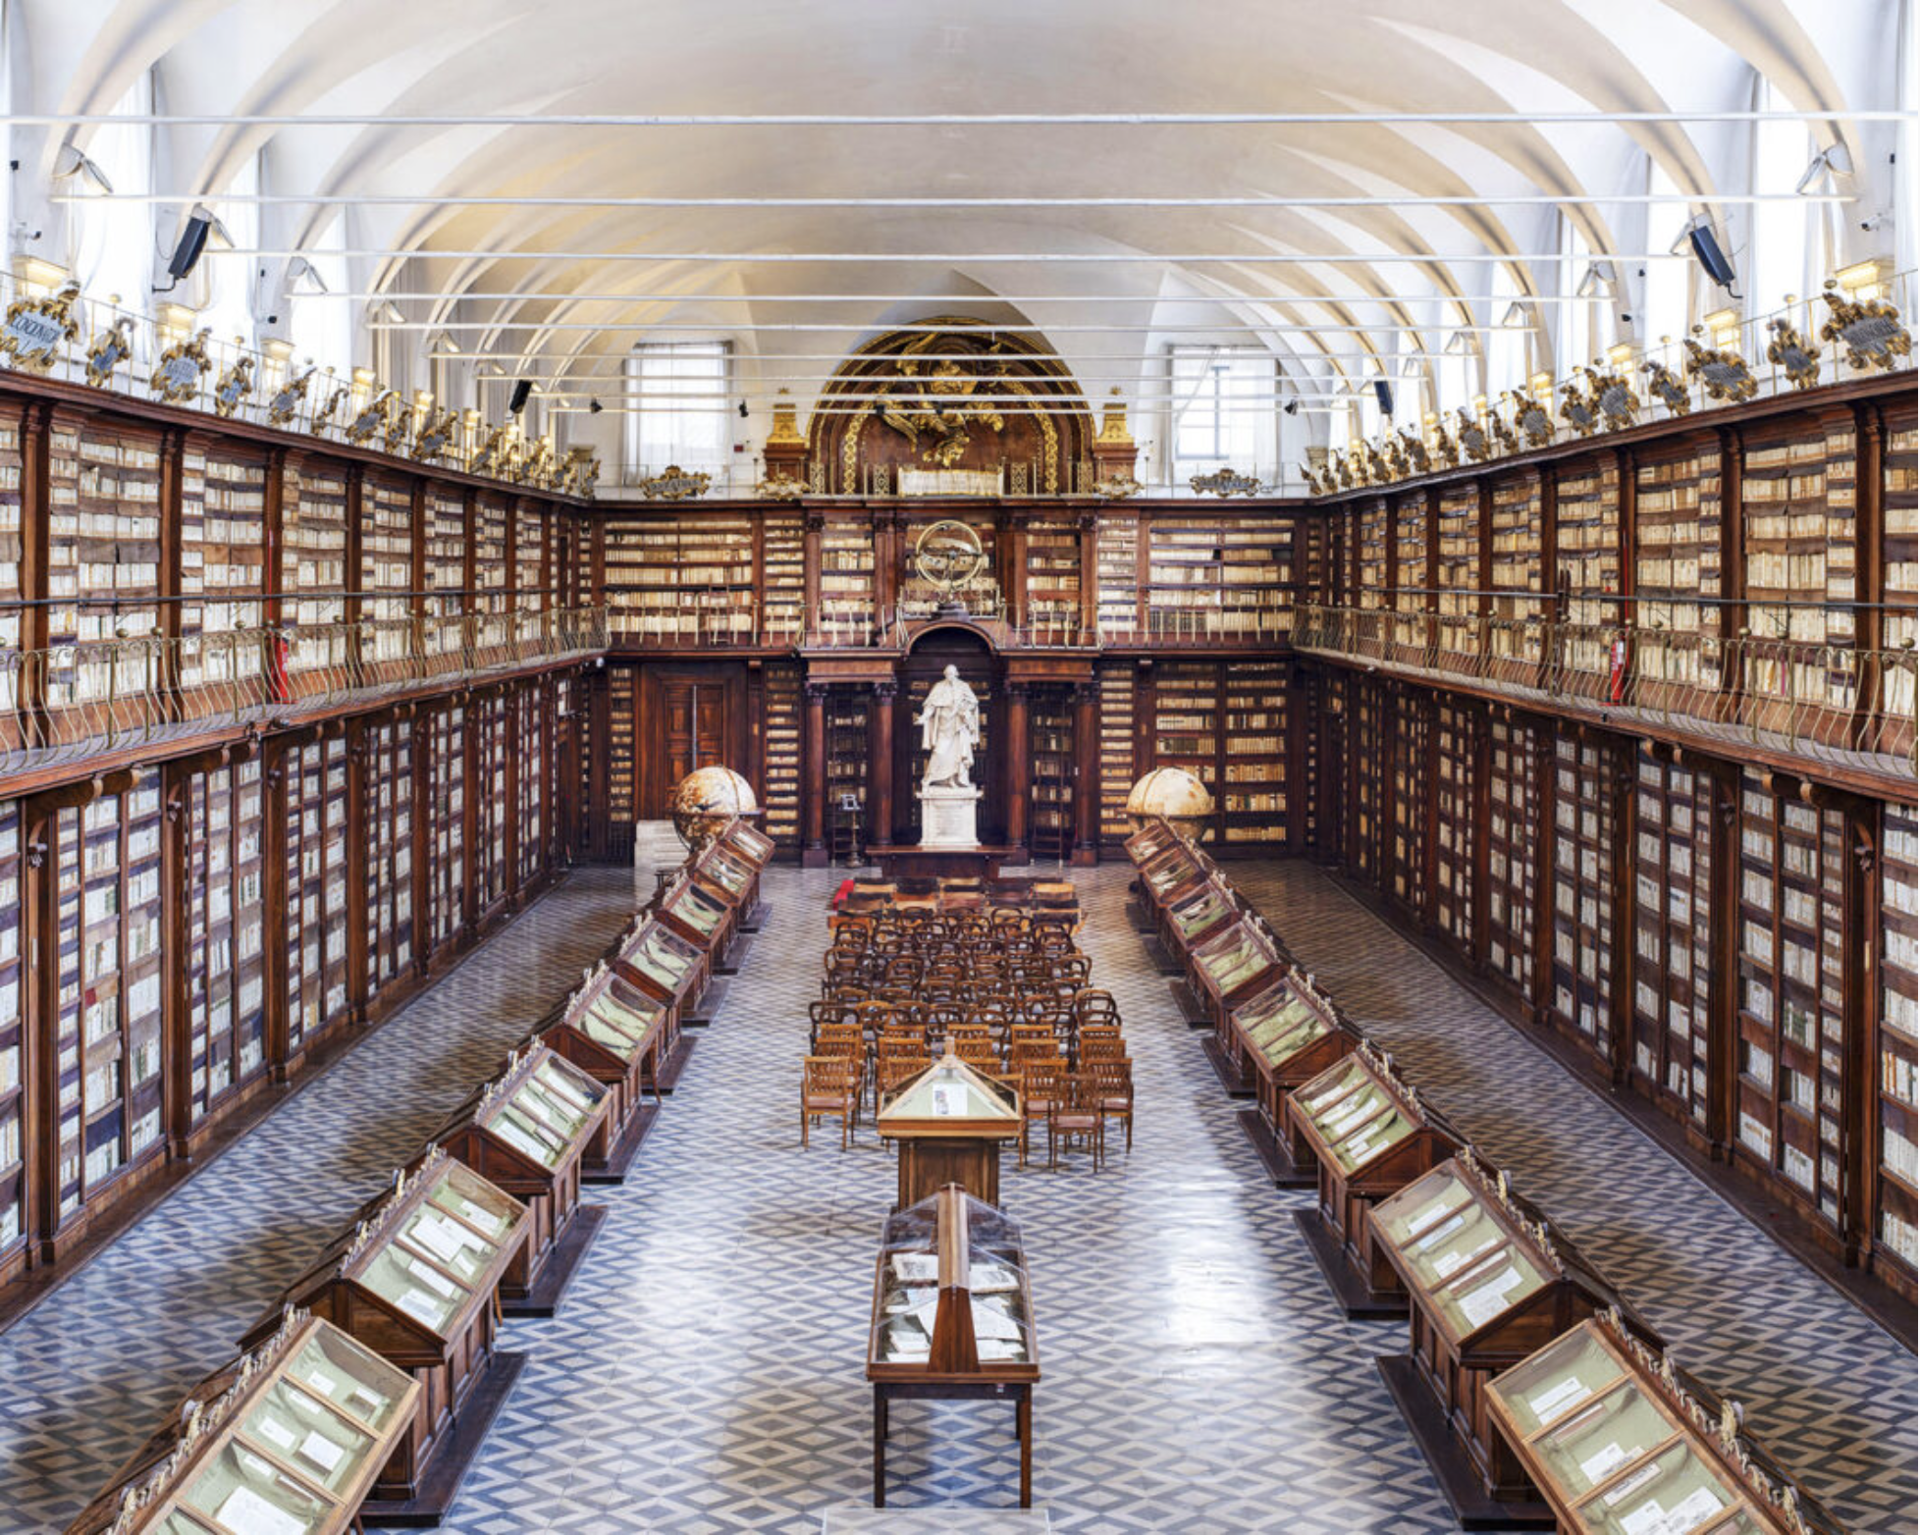 Biblioteca Casanatense, Rome, Italy by Reinhard Gorner